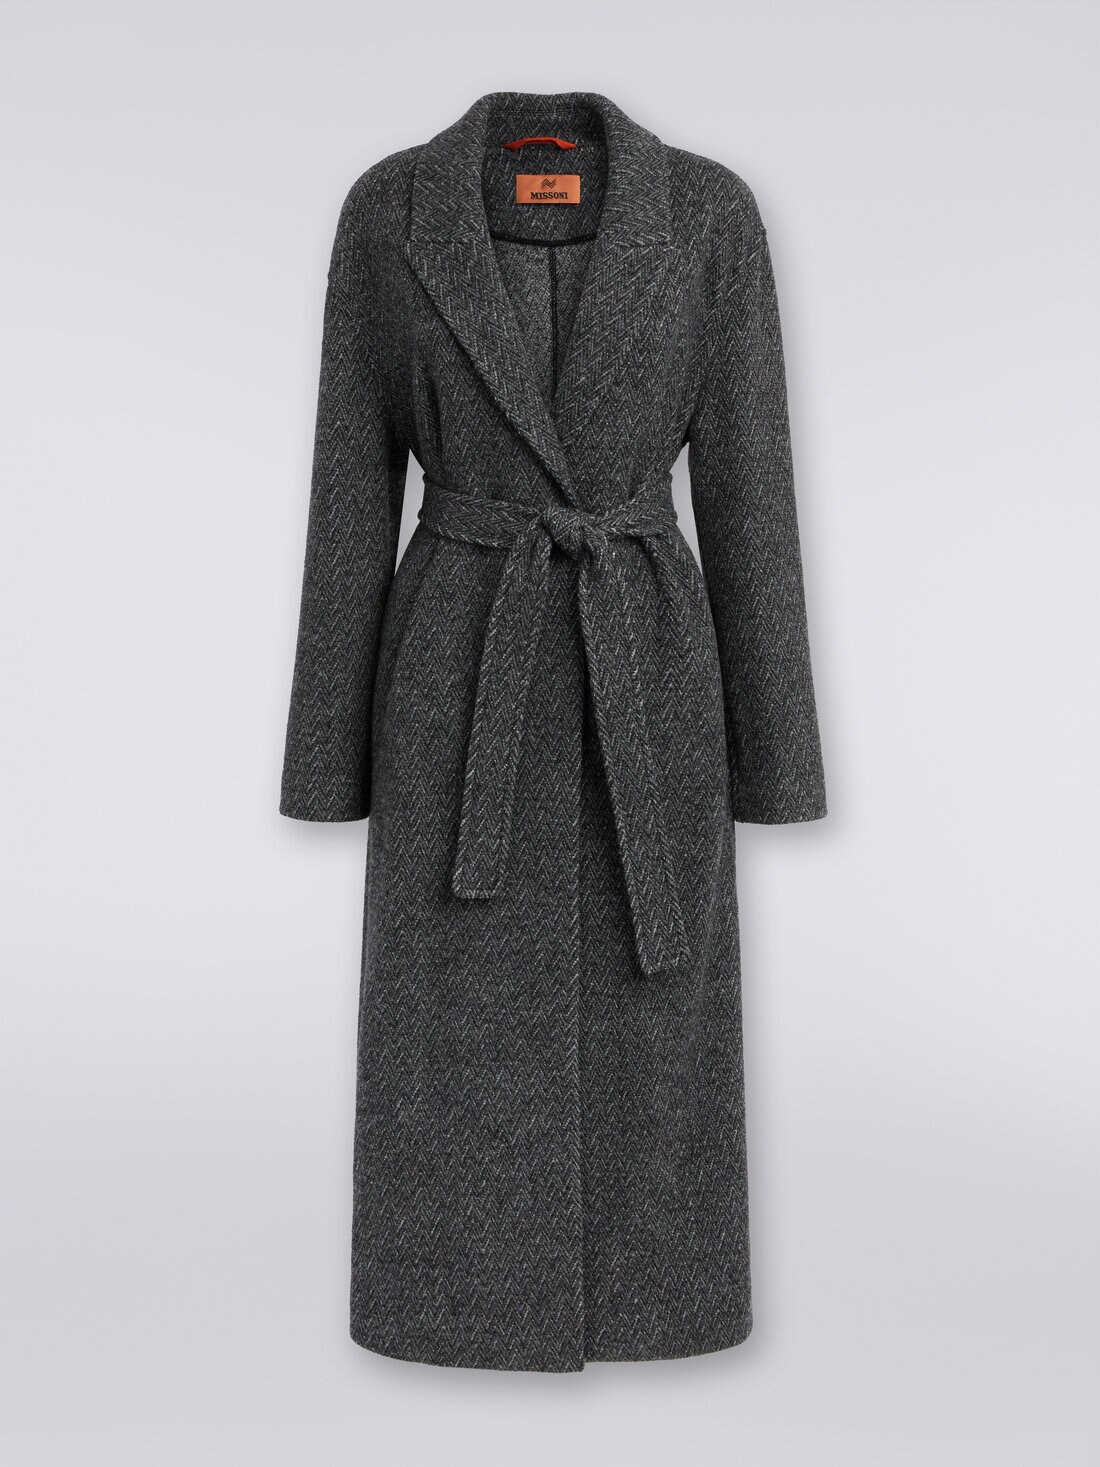 Wool coat with herringbone pattern, Black    - DC23WC00BT003OS91HG - 0